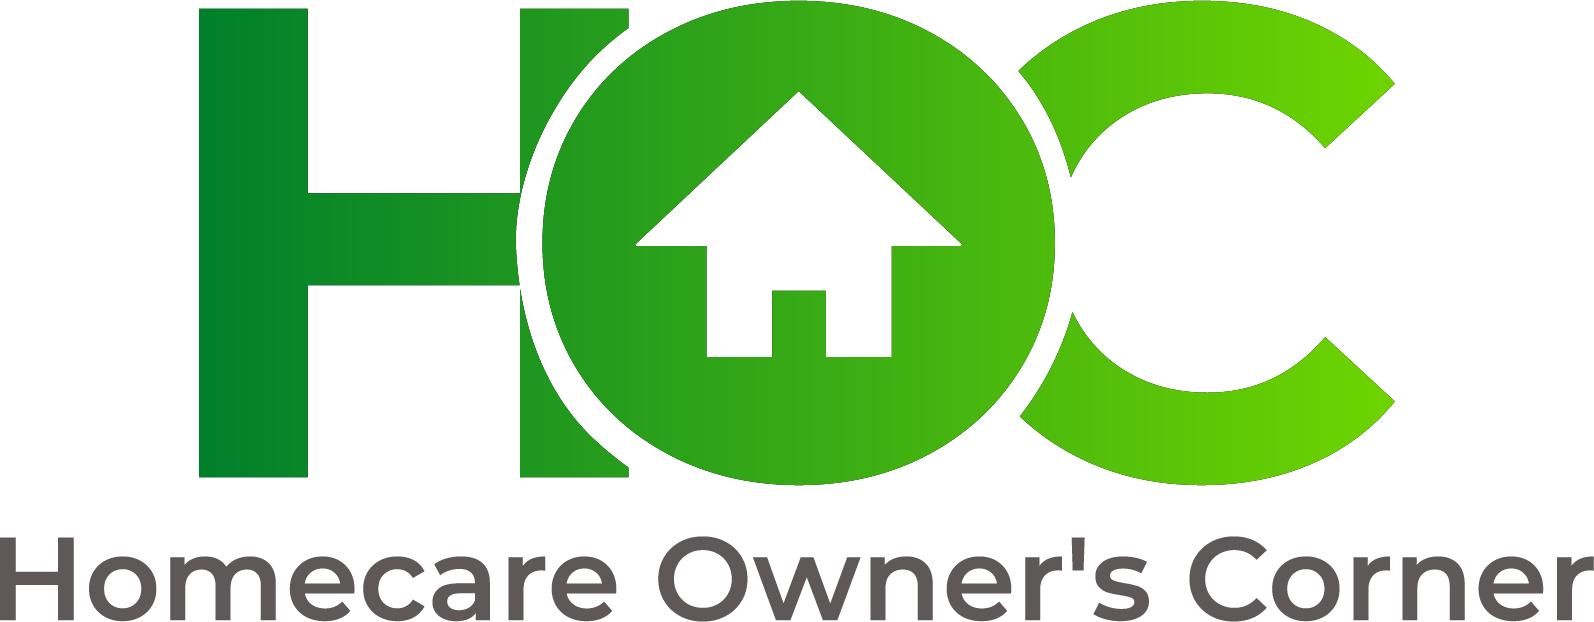 Homecare Owners Corner Pro